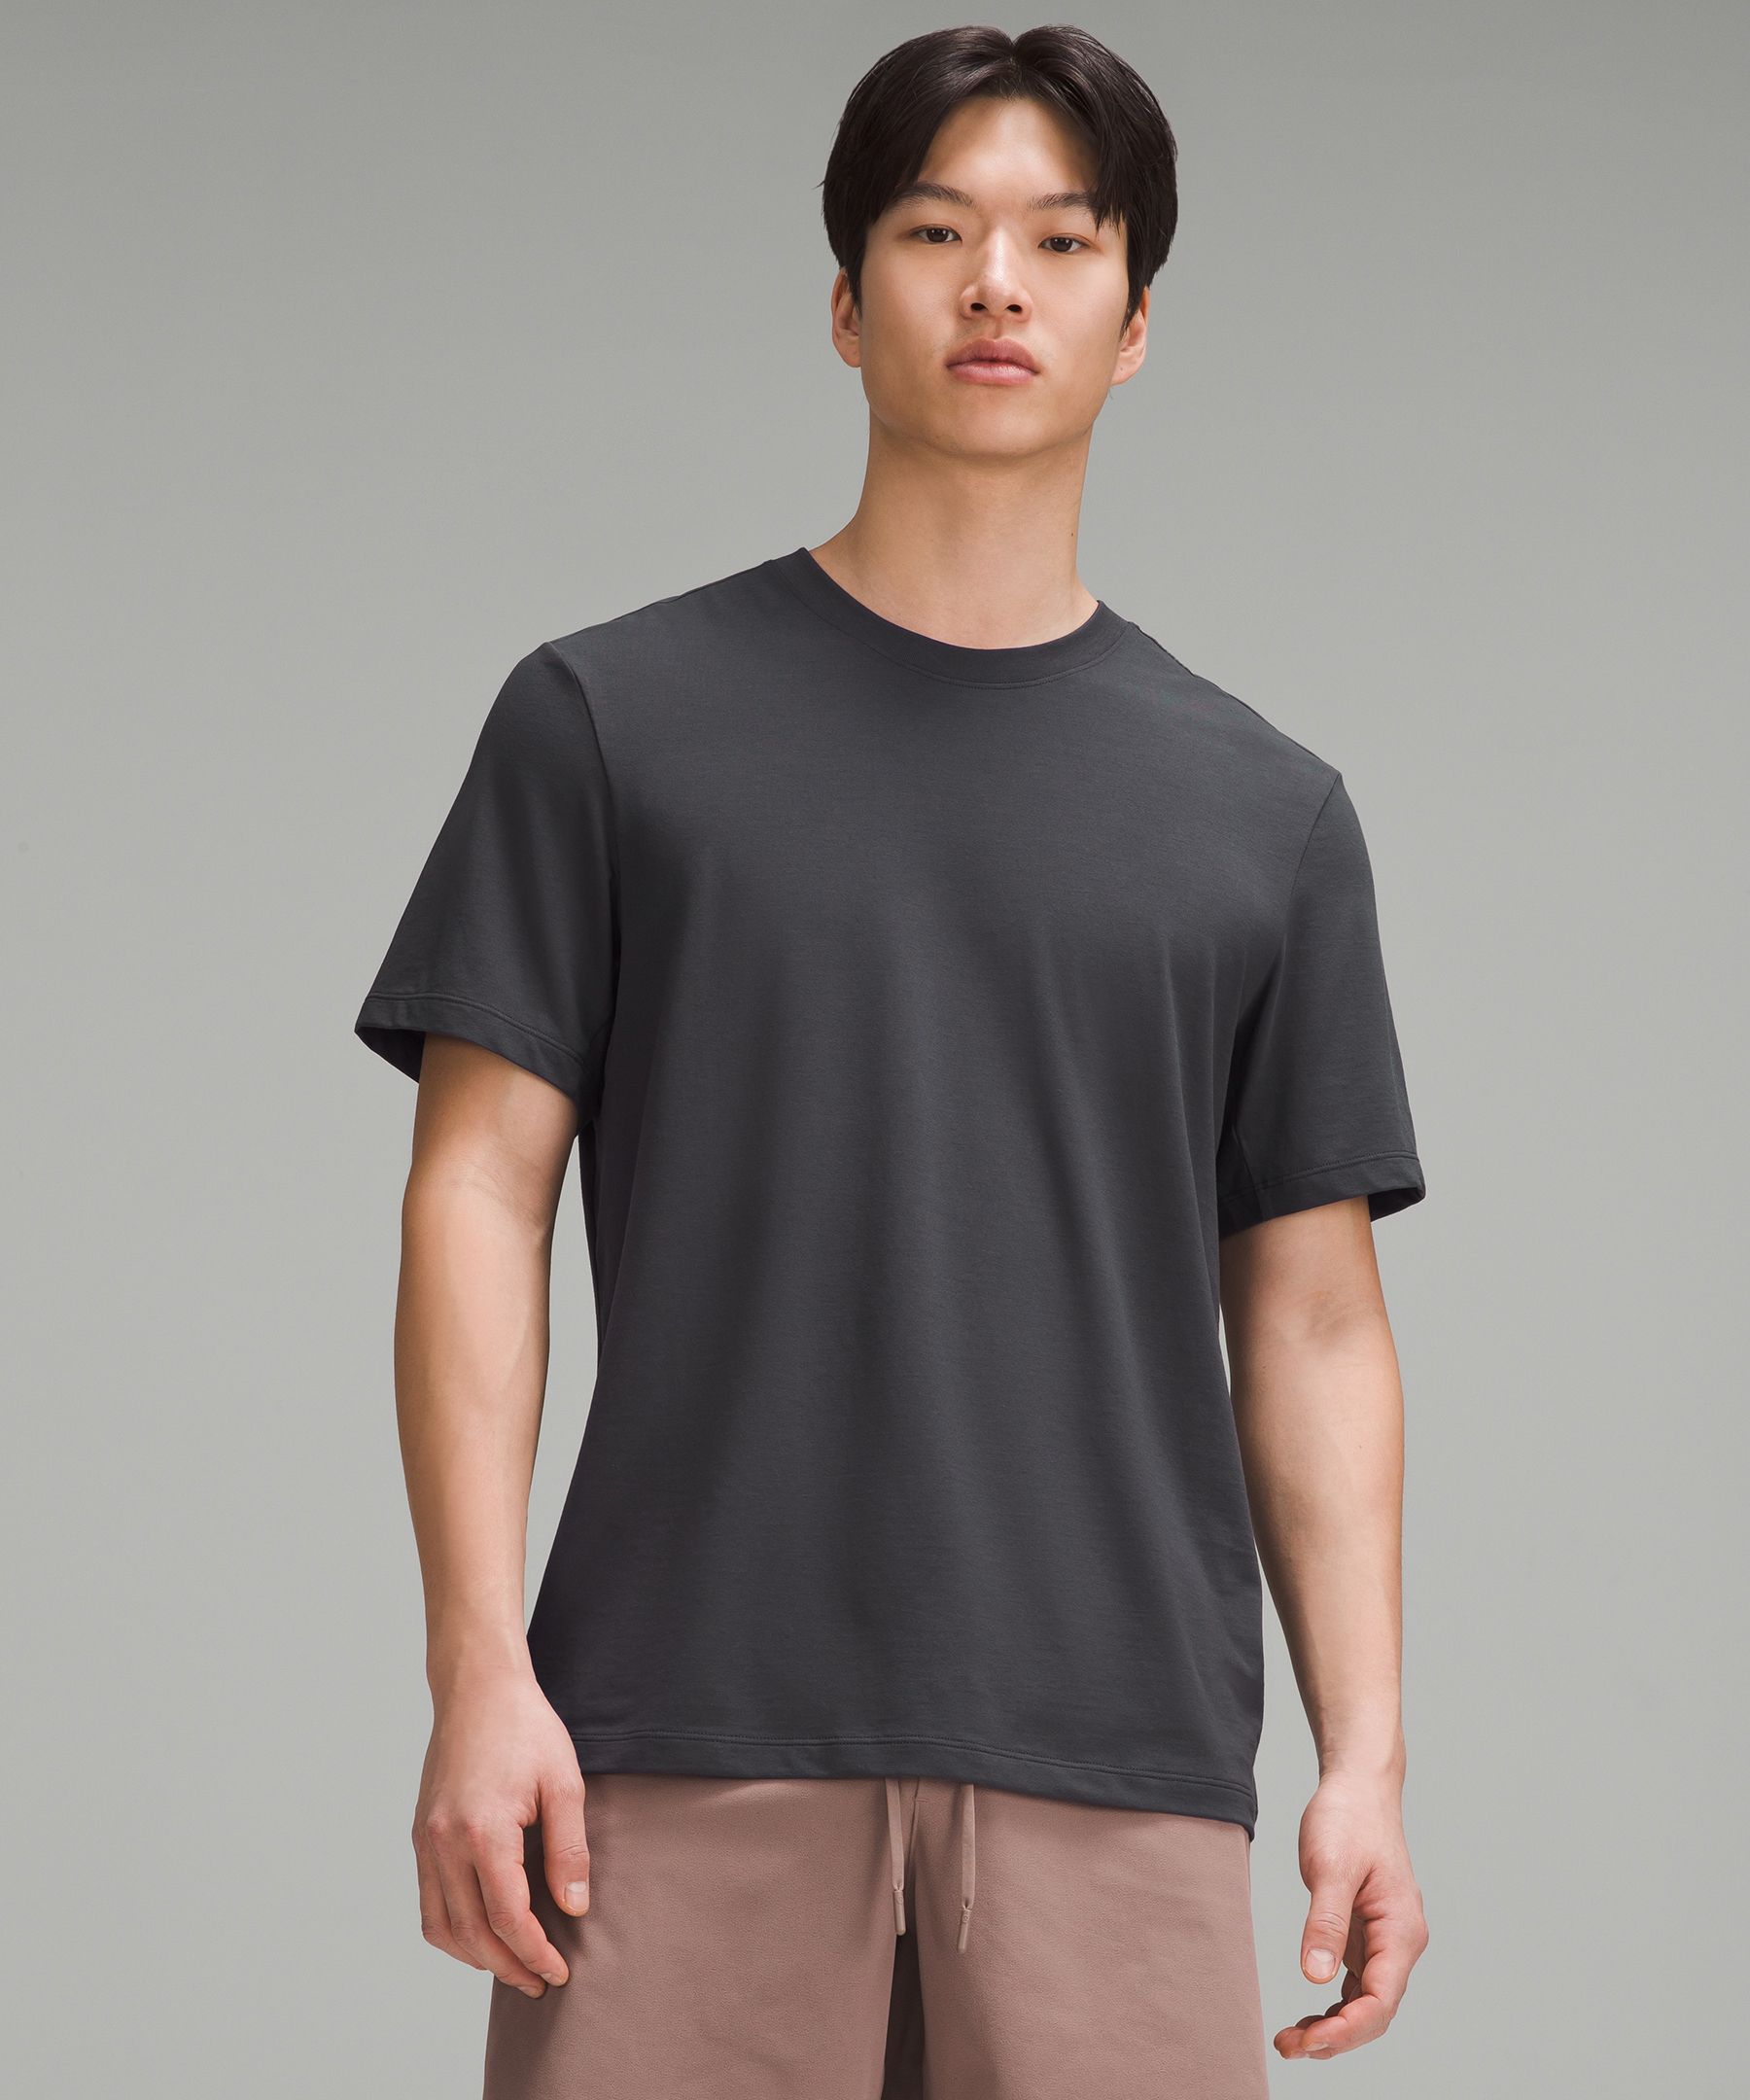 Lululemon Athletica Gray Active T-Shirt Size 10 - 43% off